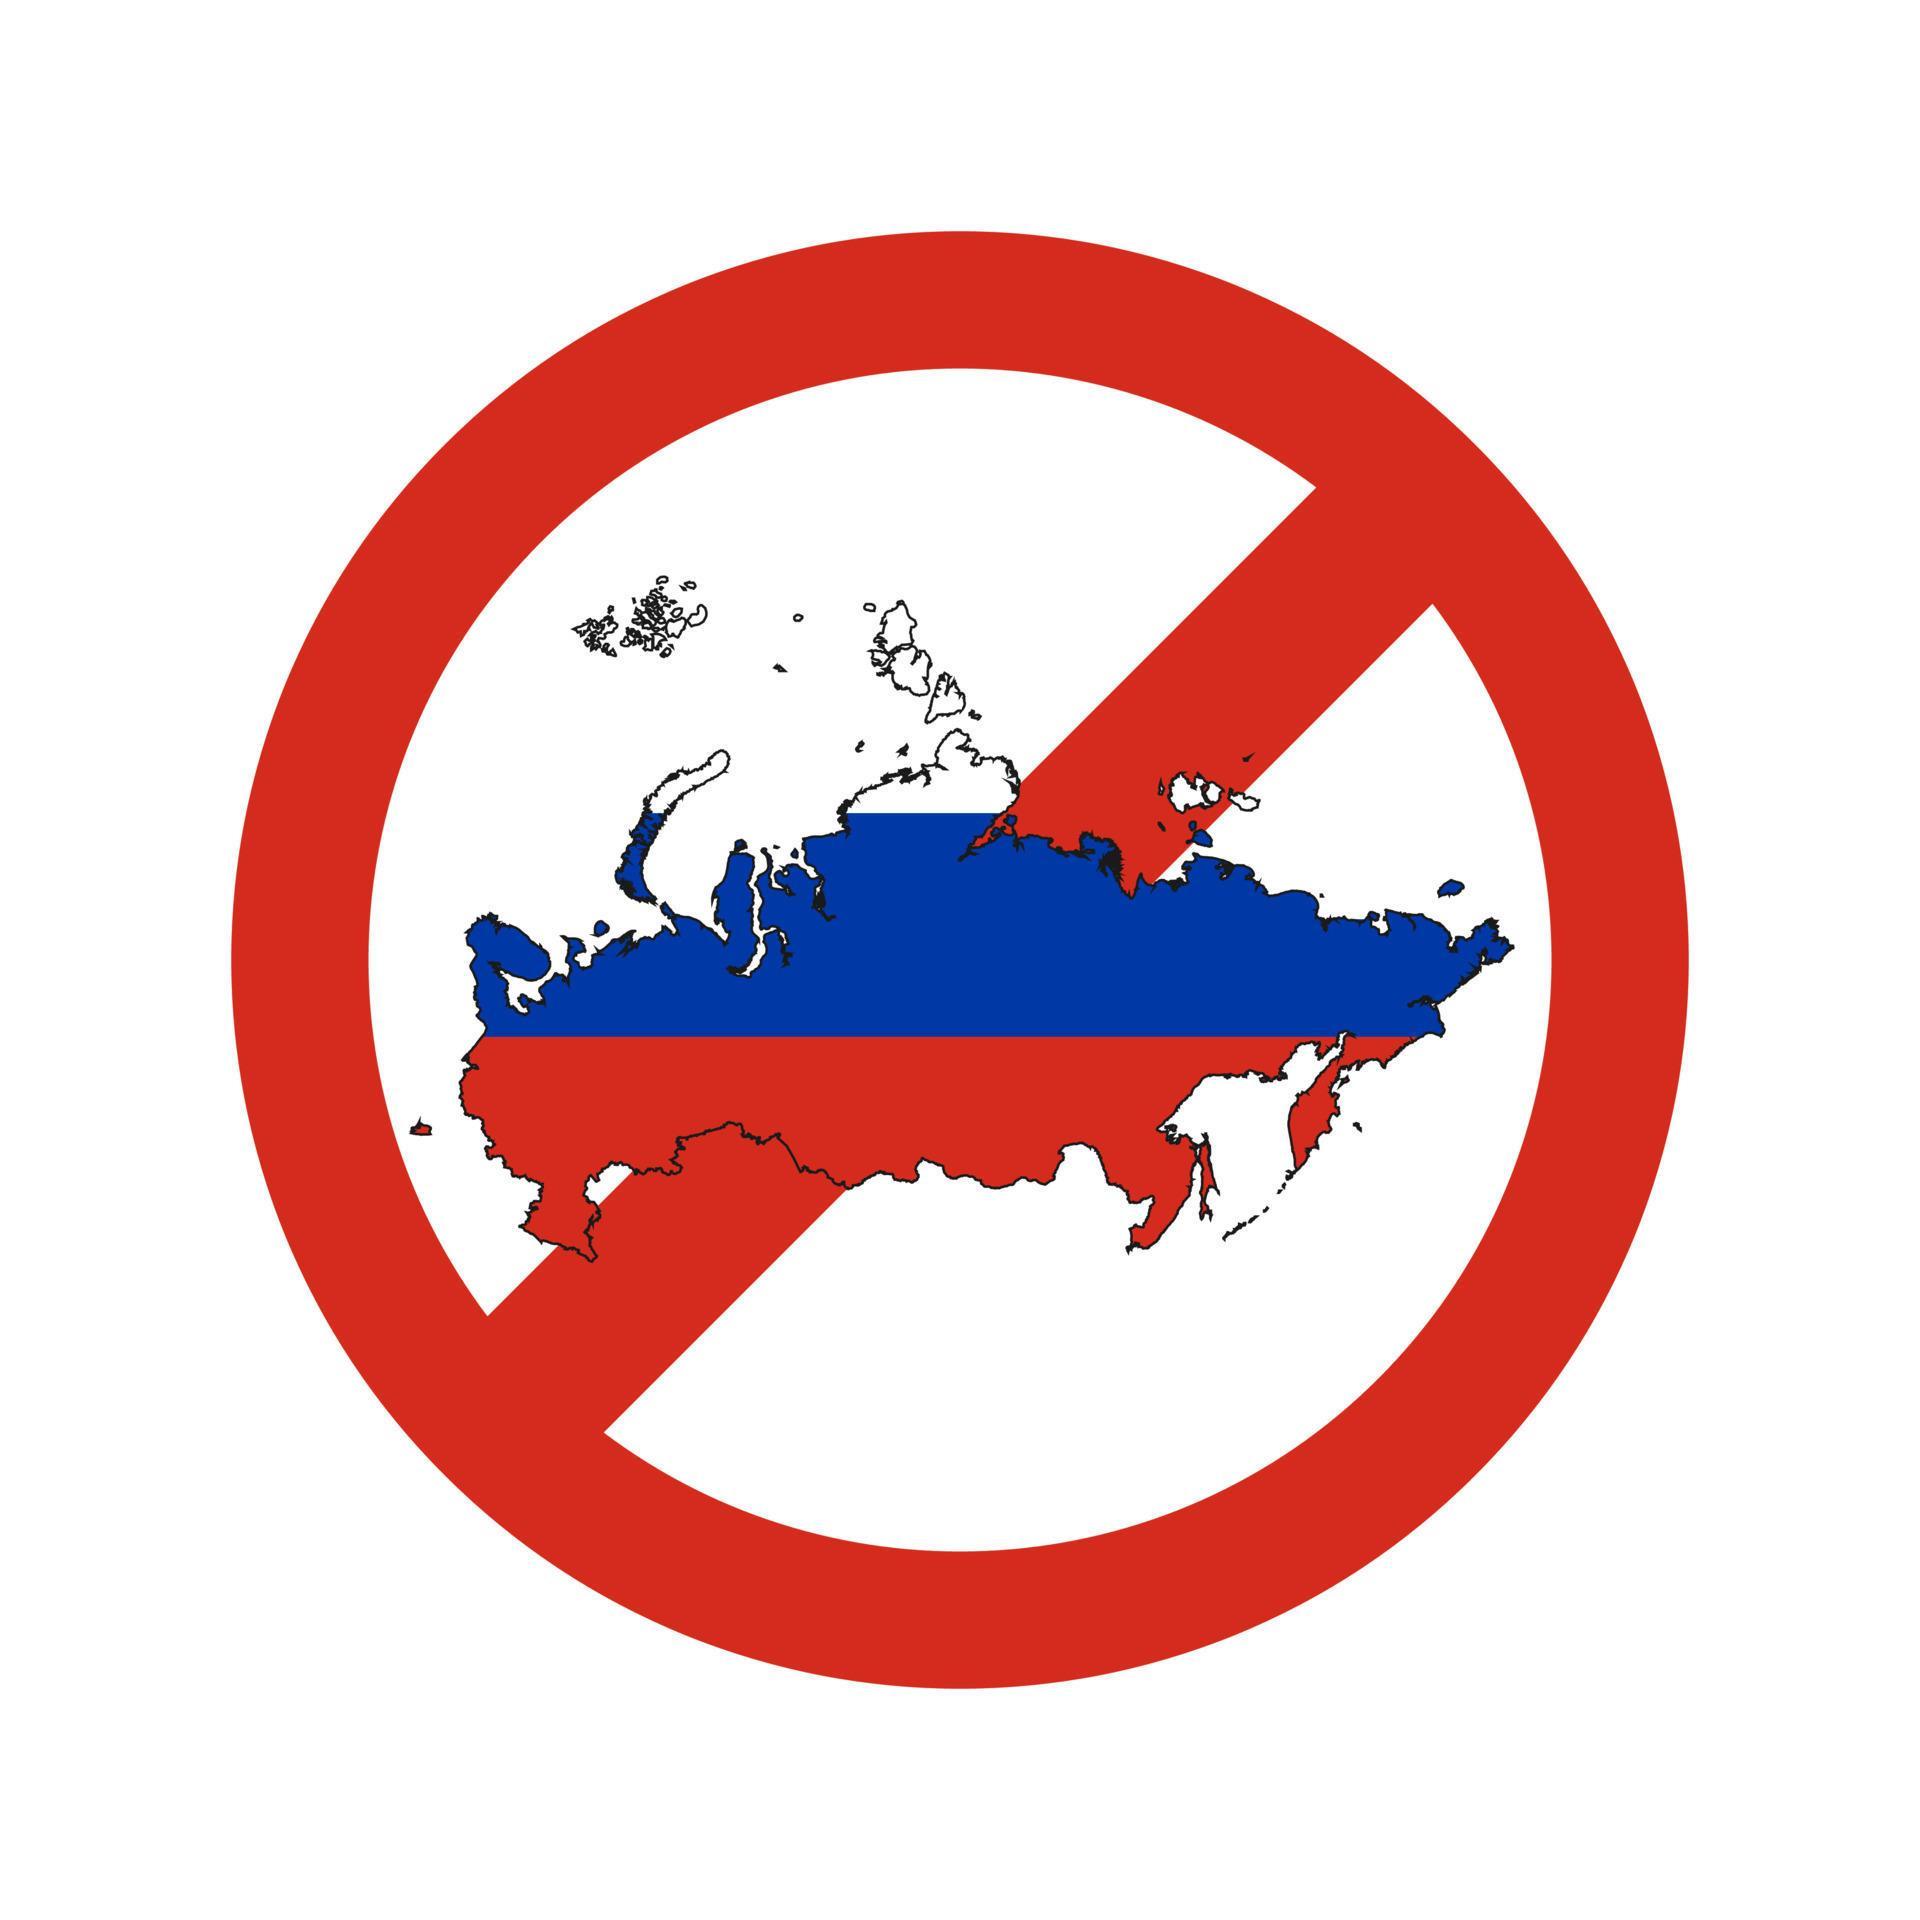 Стоп бан. Агрессор символ. Russia is a terrorist State. Russian ban